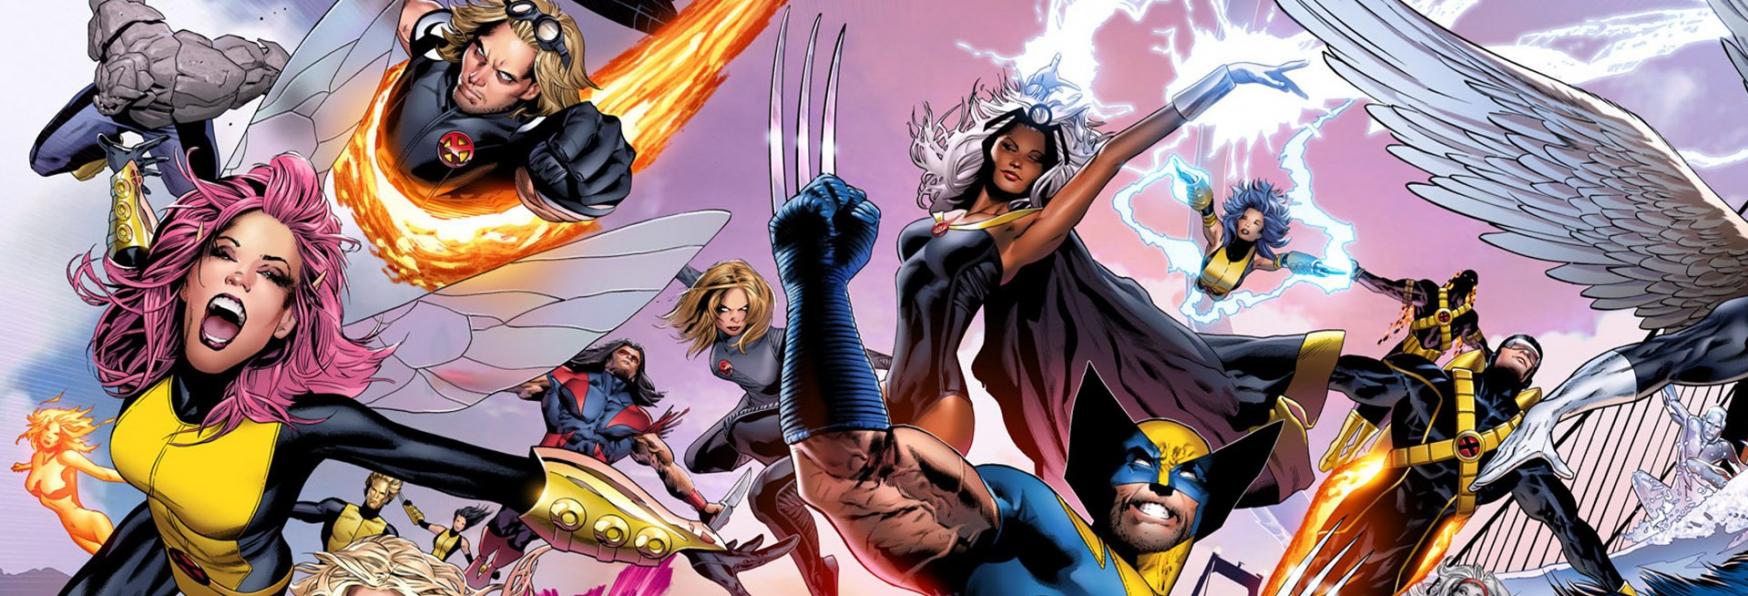 X-Men ’97: Beau DeMayo (The Witcher) sarà lo Showrunner dell’inedita Serie Animata Marvel